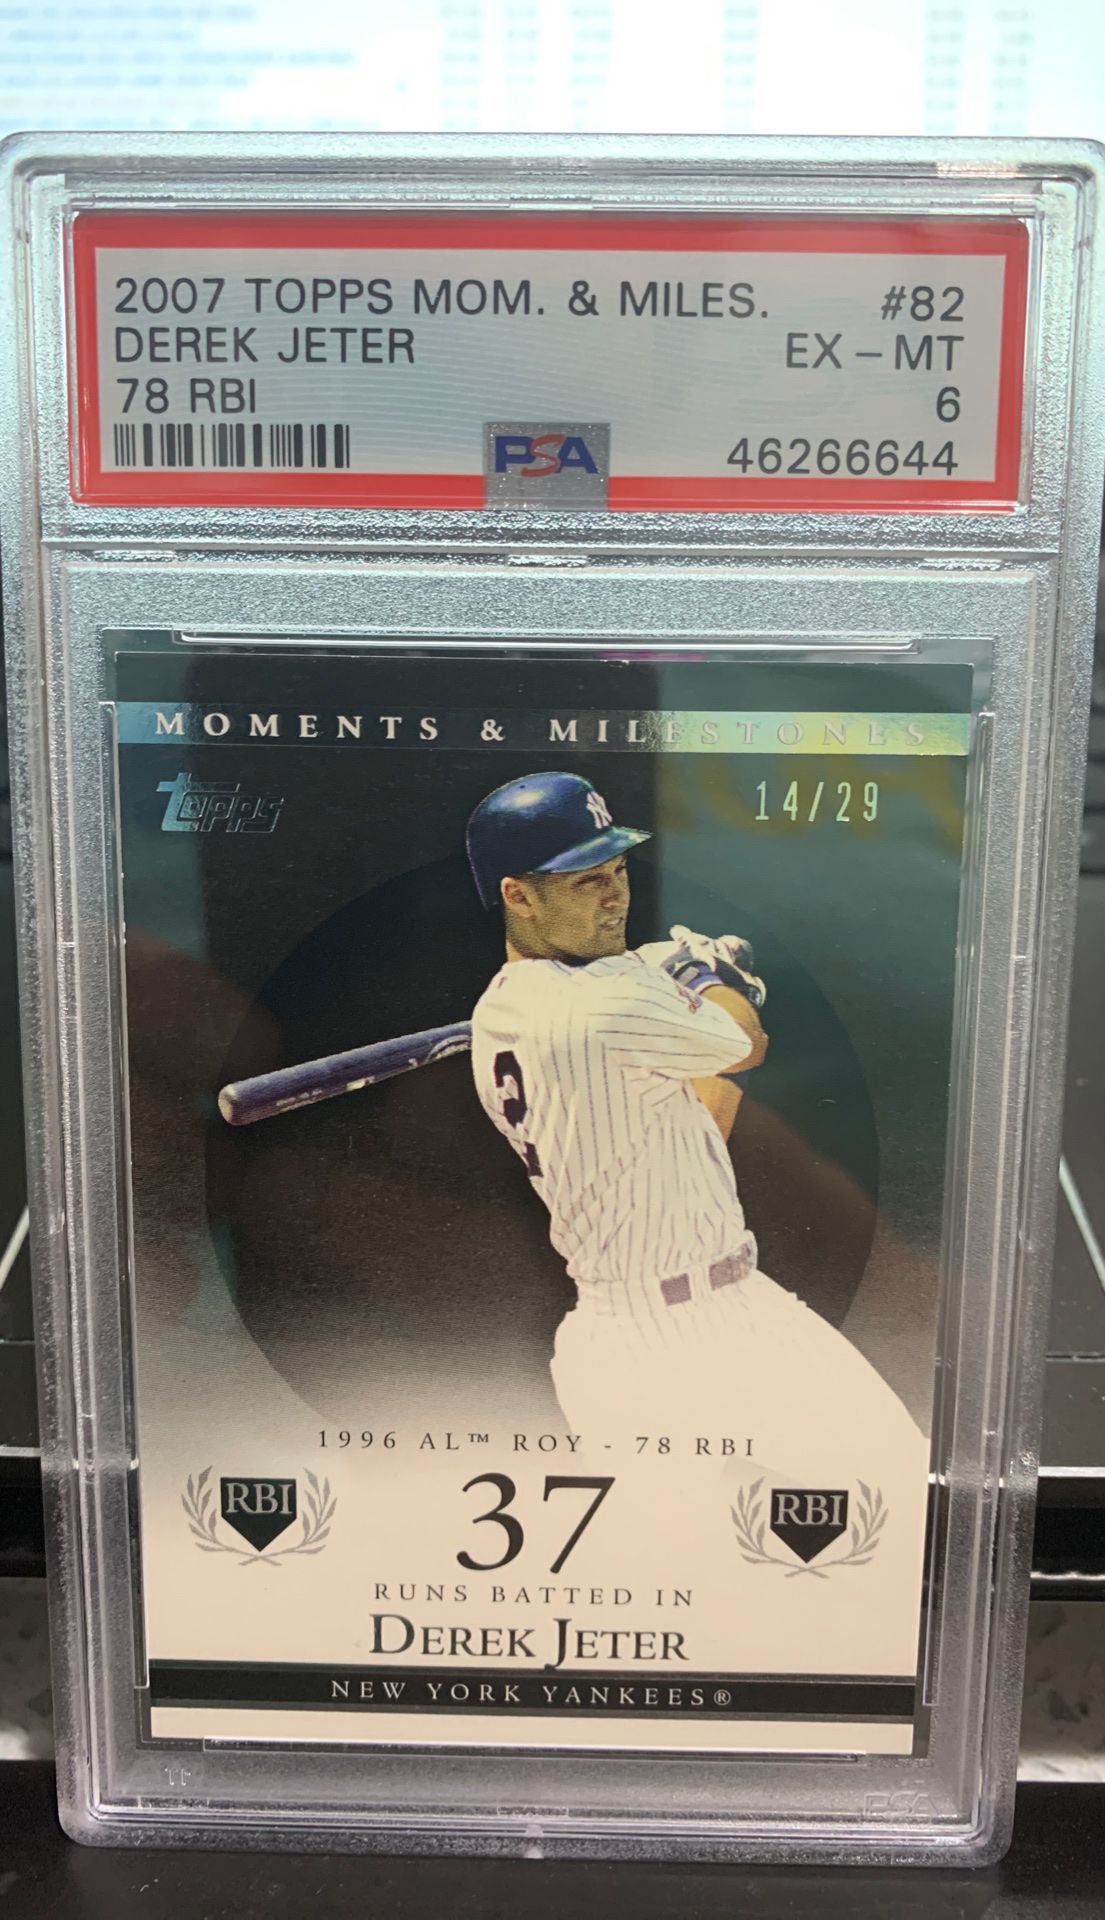 Rare PSA graded baseball card